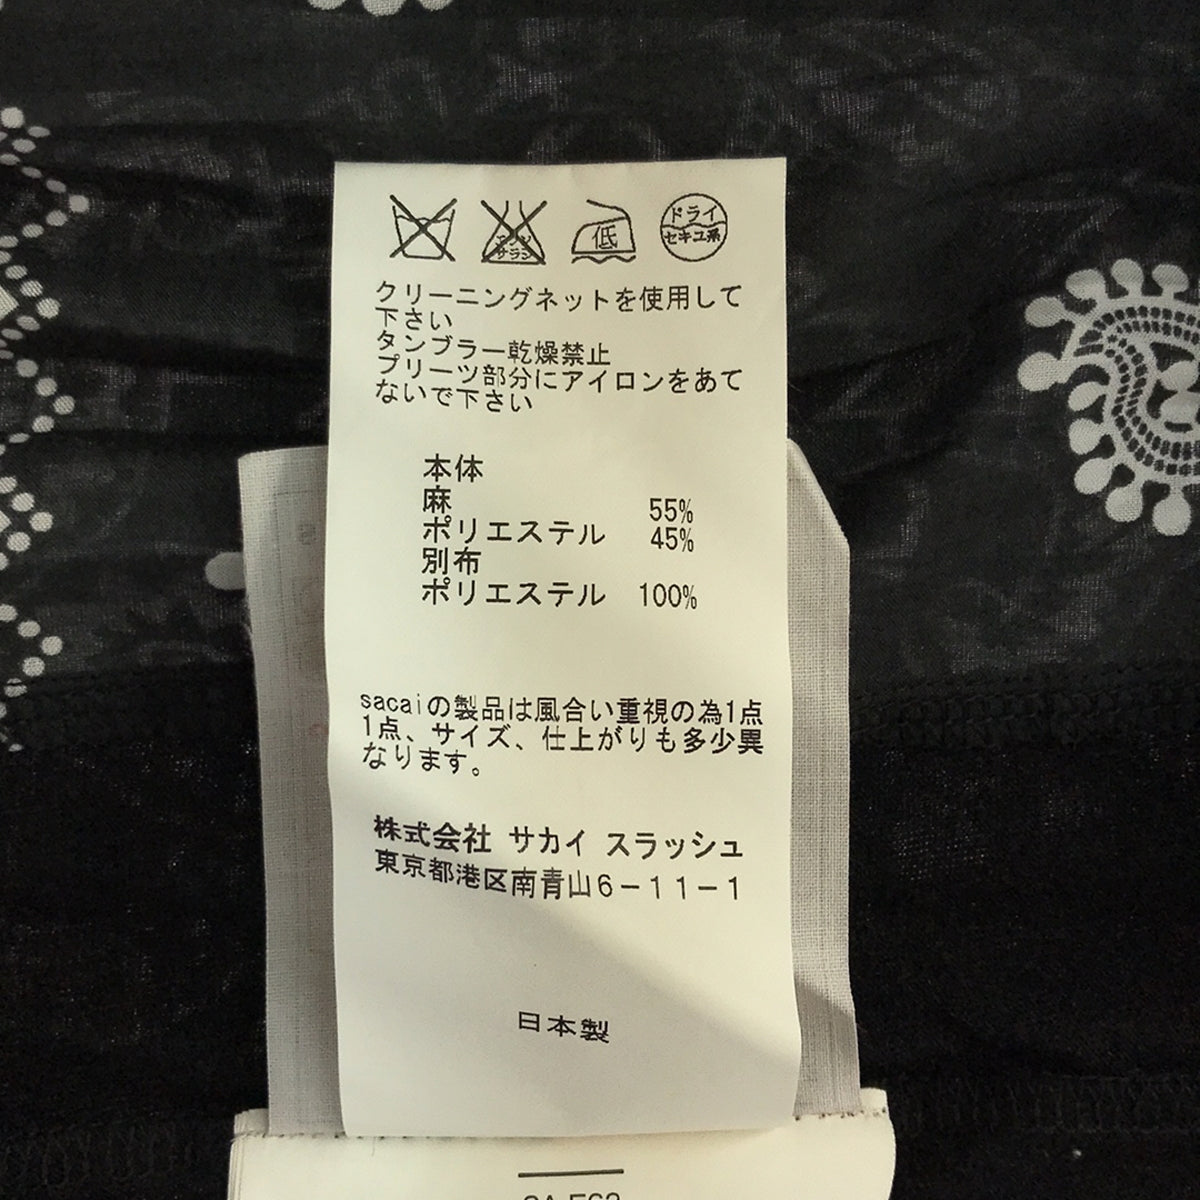 sacai / サカイ | バックフレア プリーツ バンダナ柄 異素材切替 Tシャツ | 1 | レディース